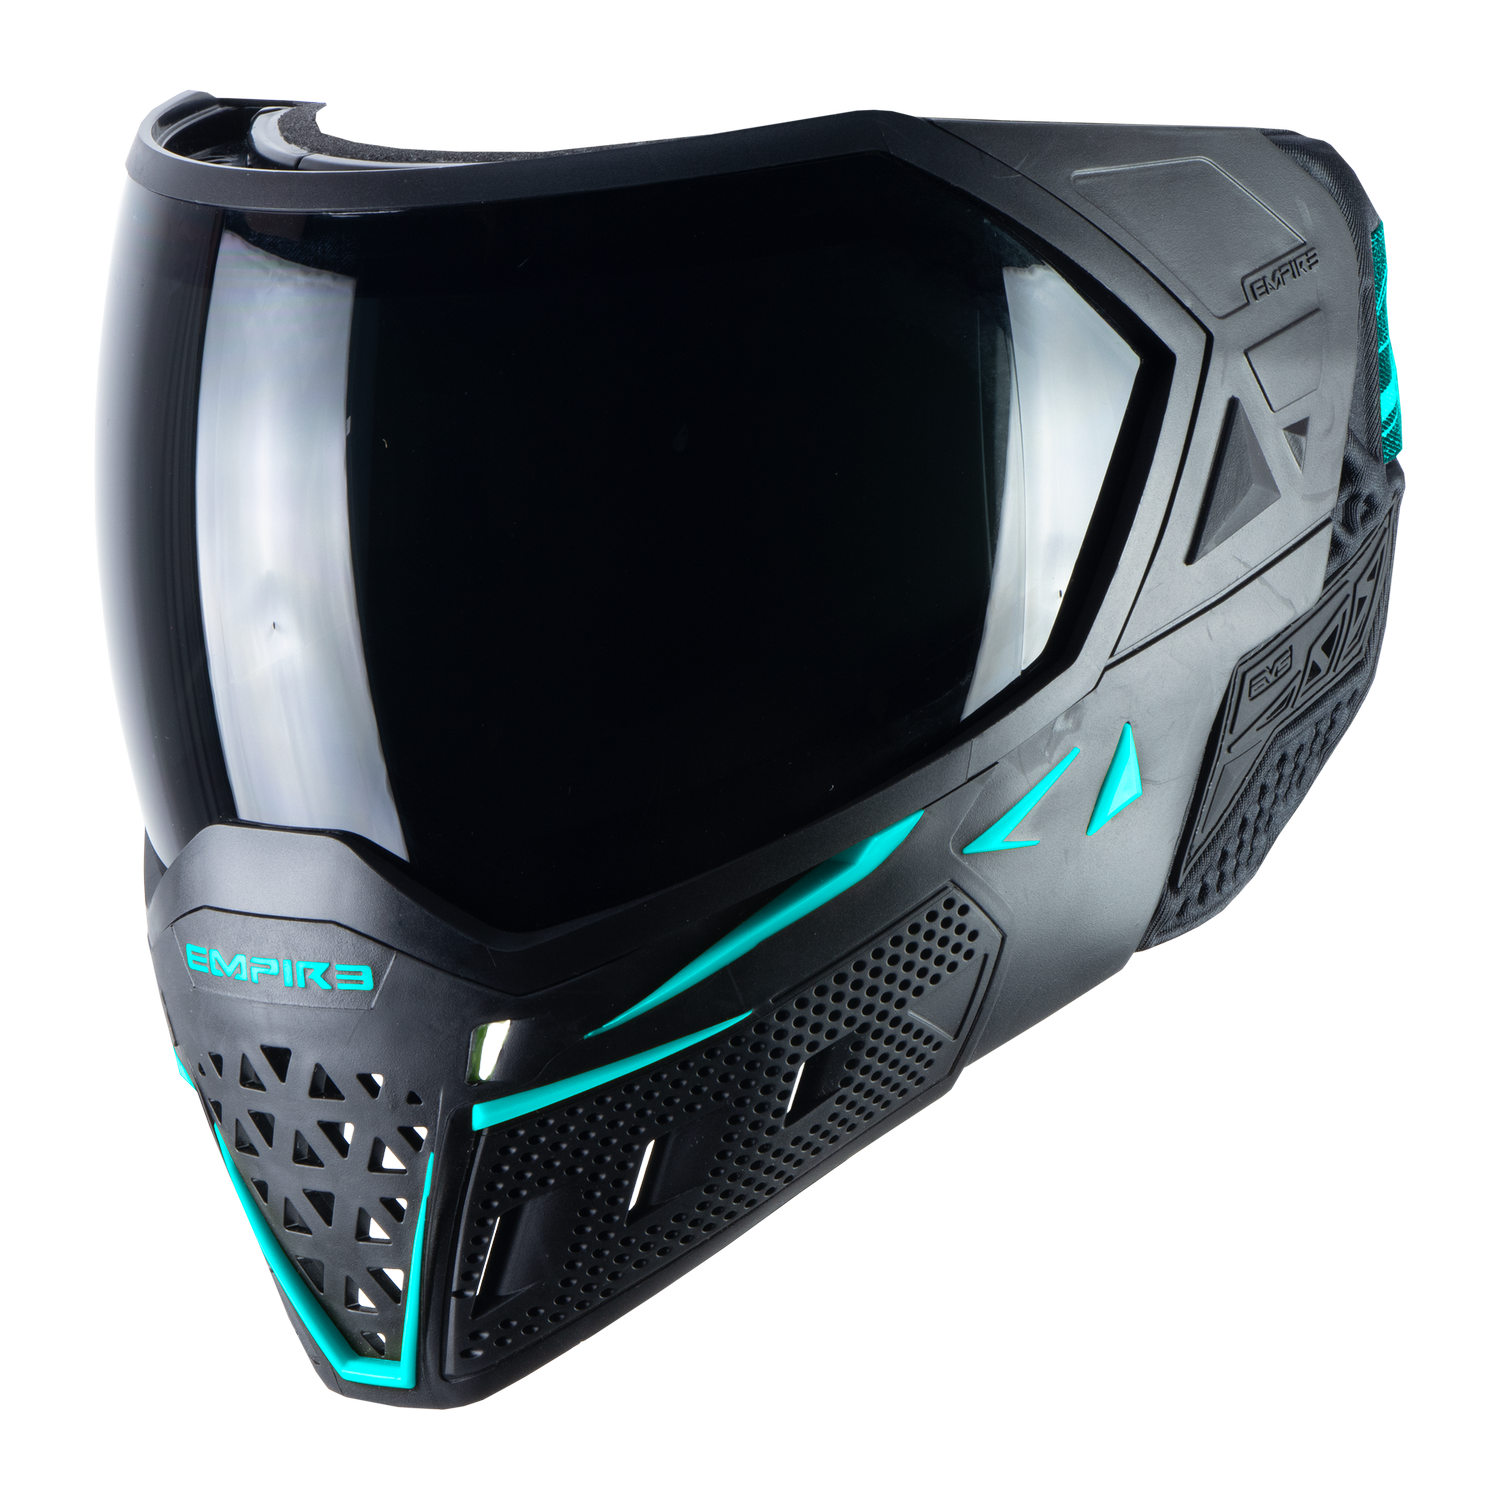  Aqua - Thermal Ninja Lens - Eminent Paintball And Airsoft